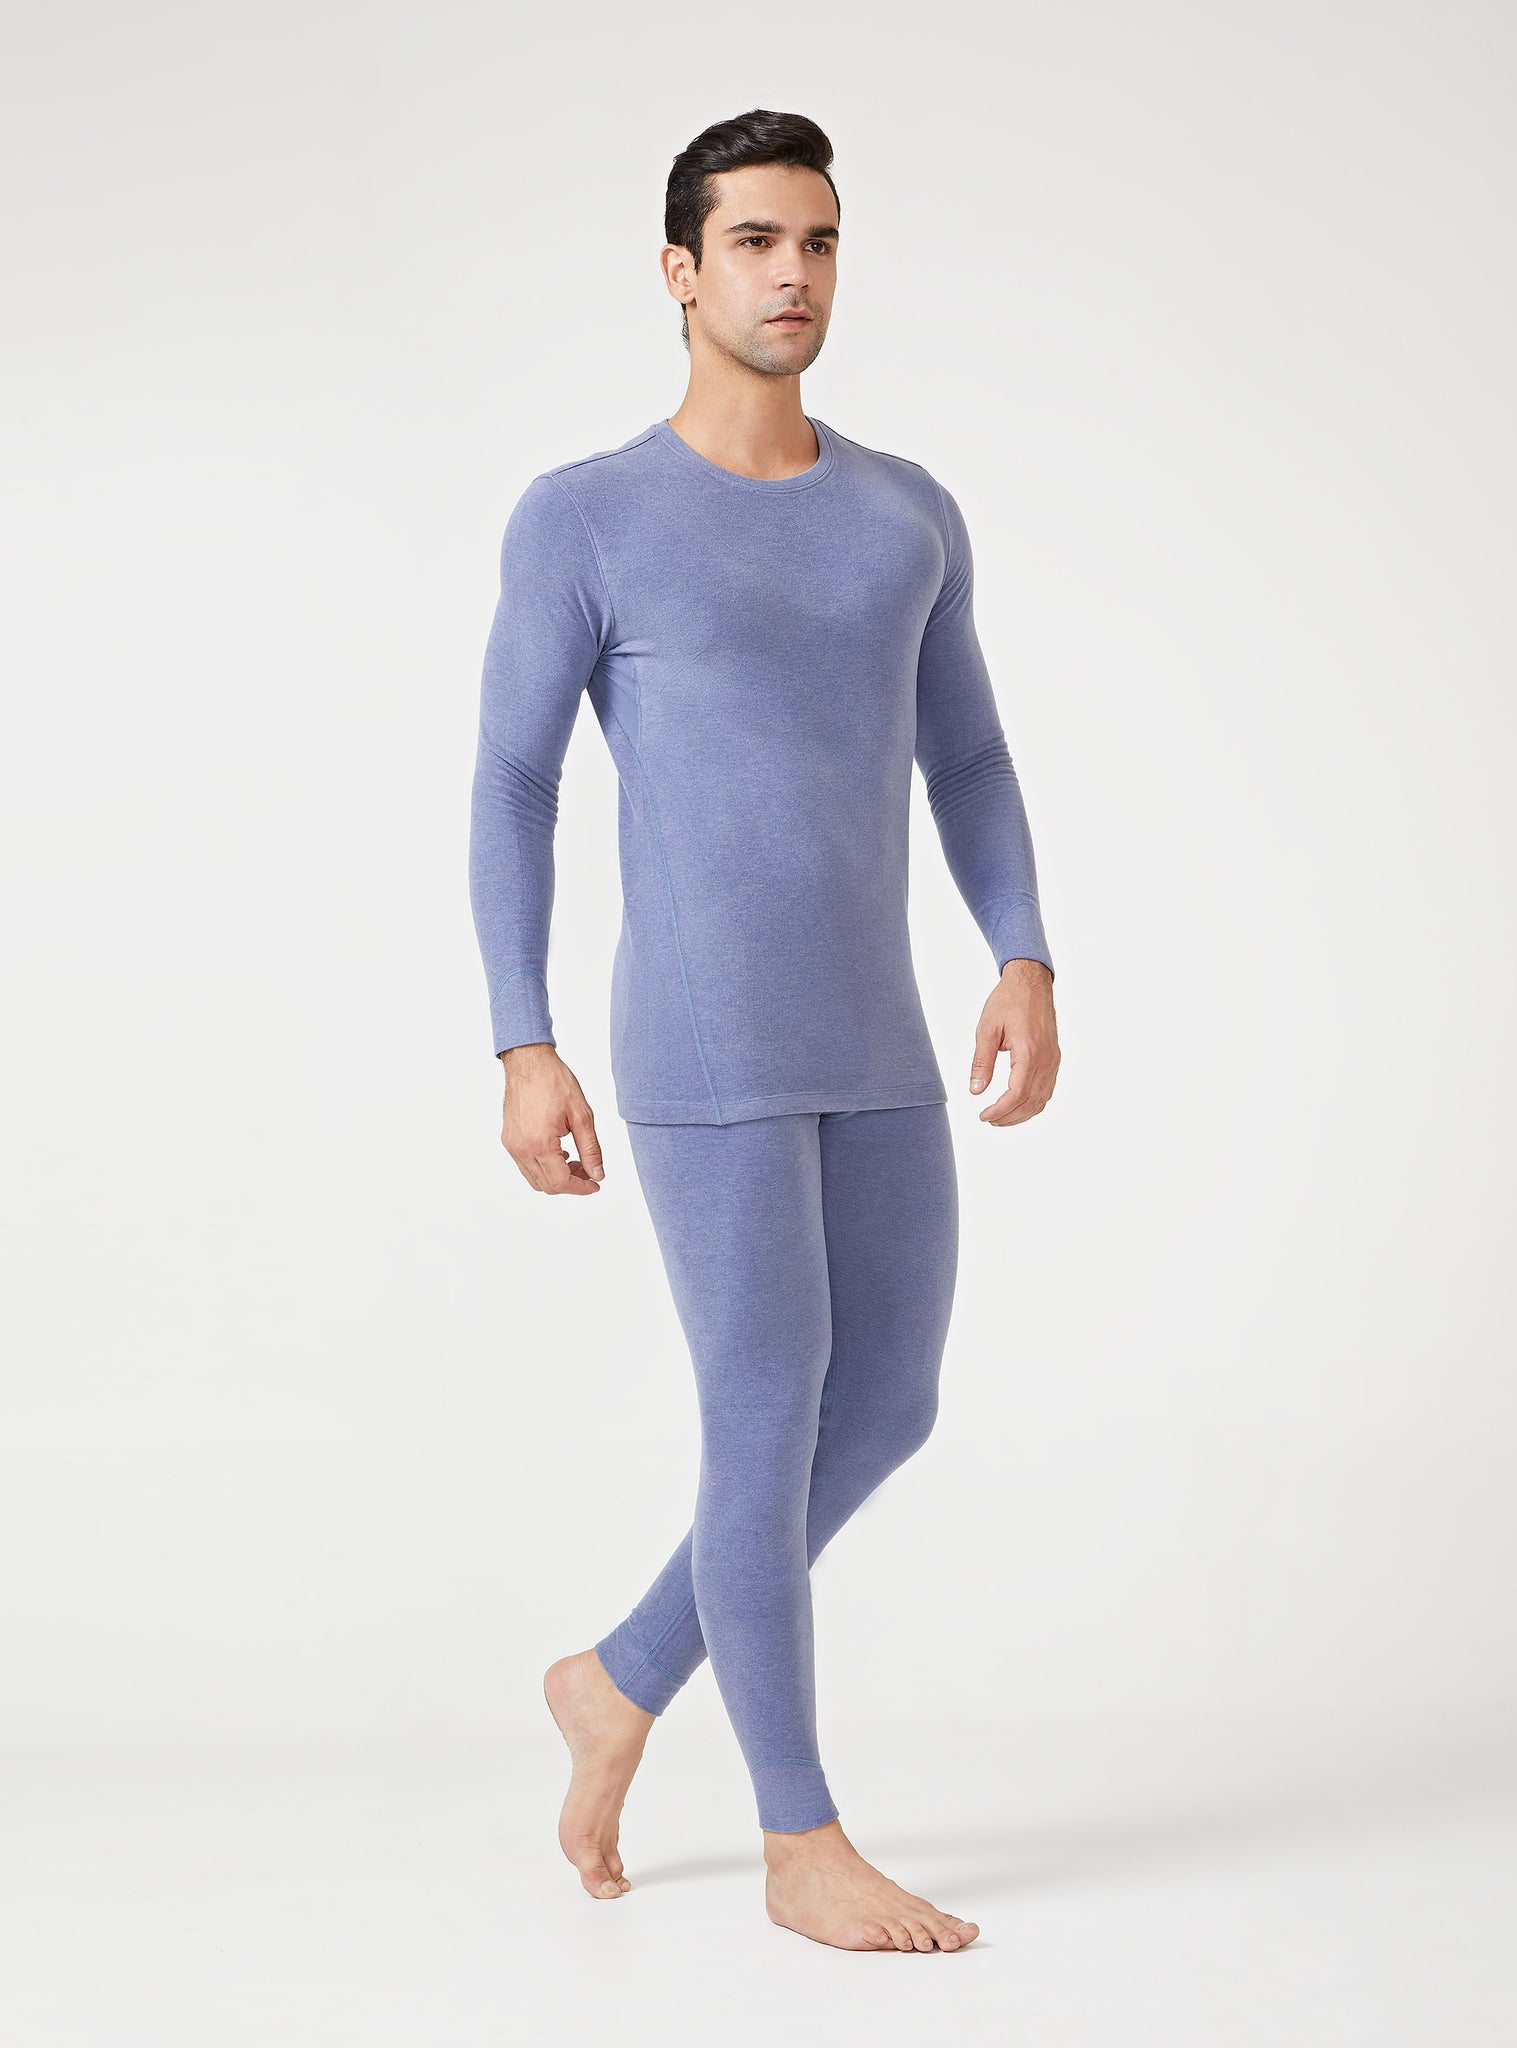 Men's Thermal Underwear Set Fleece Lined Base Layer Pajama Set